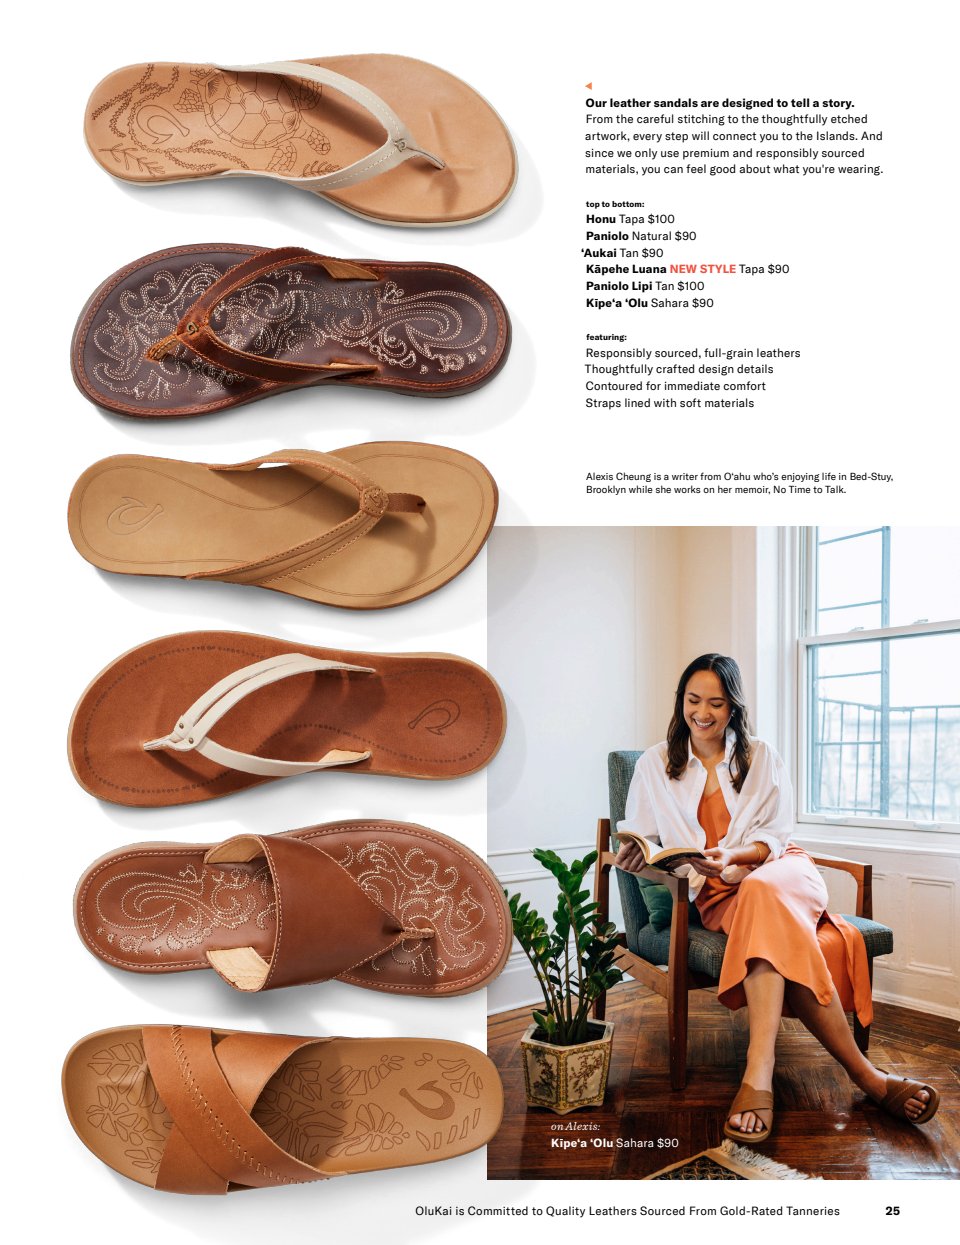 New Olukai Women's Paniolo Lipi Flip Flops Tan/Tan Choose Size 